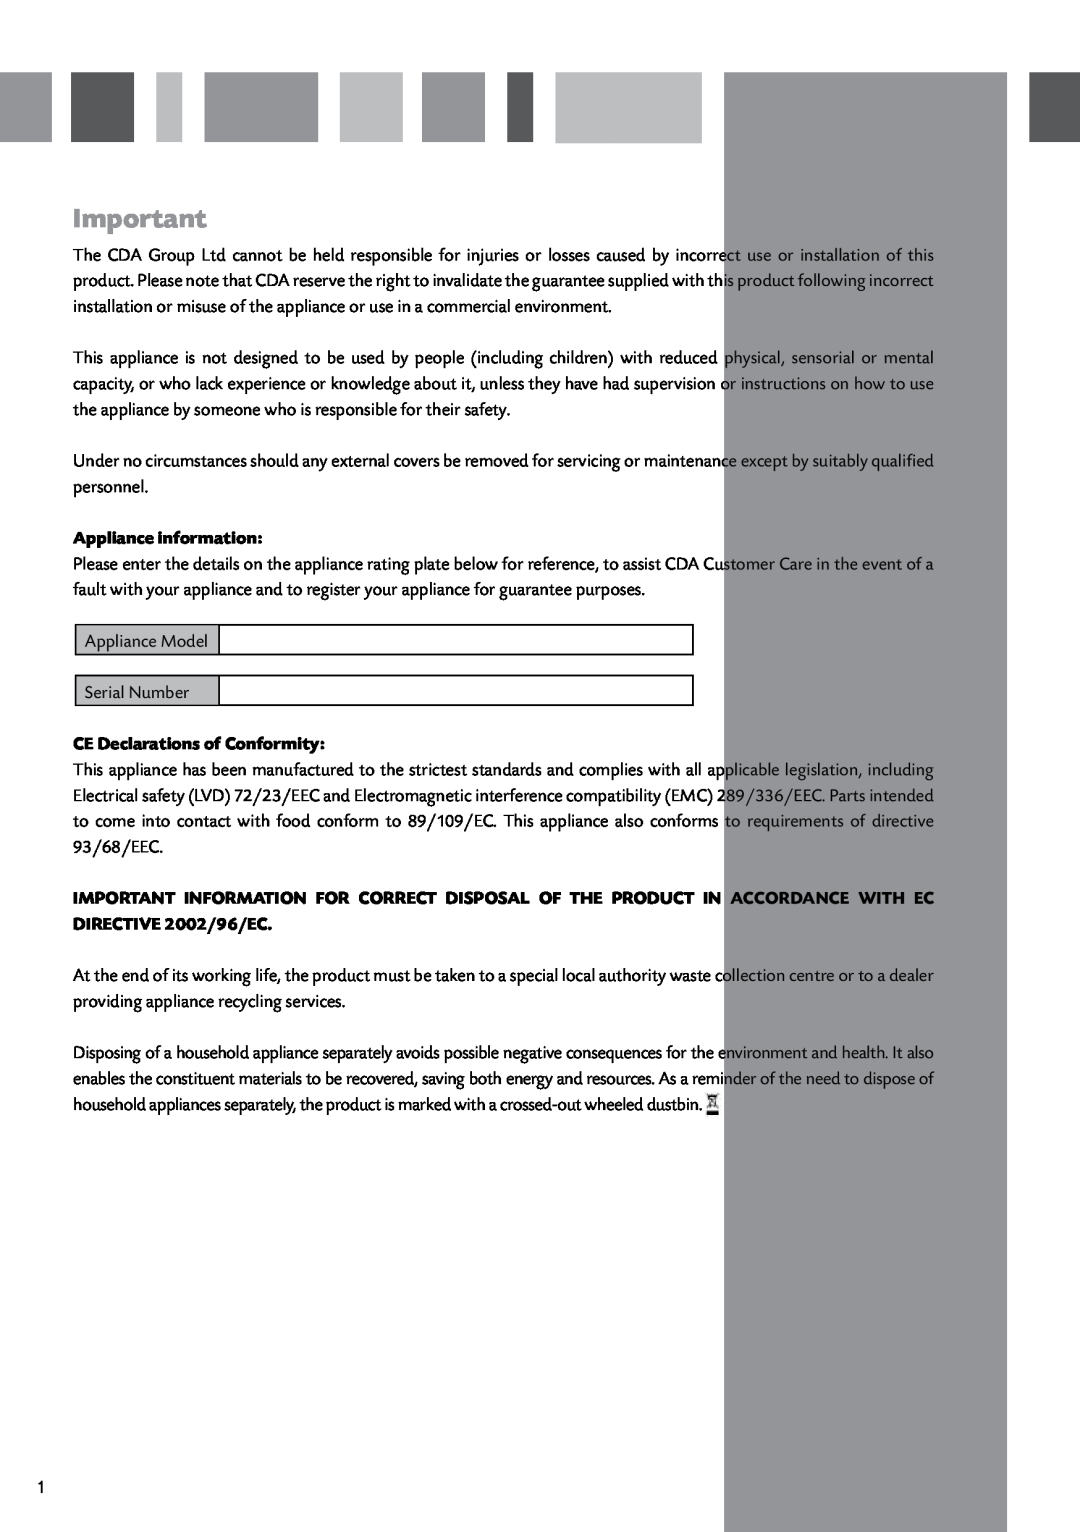 CDA HVC65 manual Appliance information, CE Declarations of Conformity 